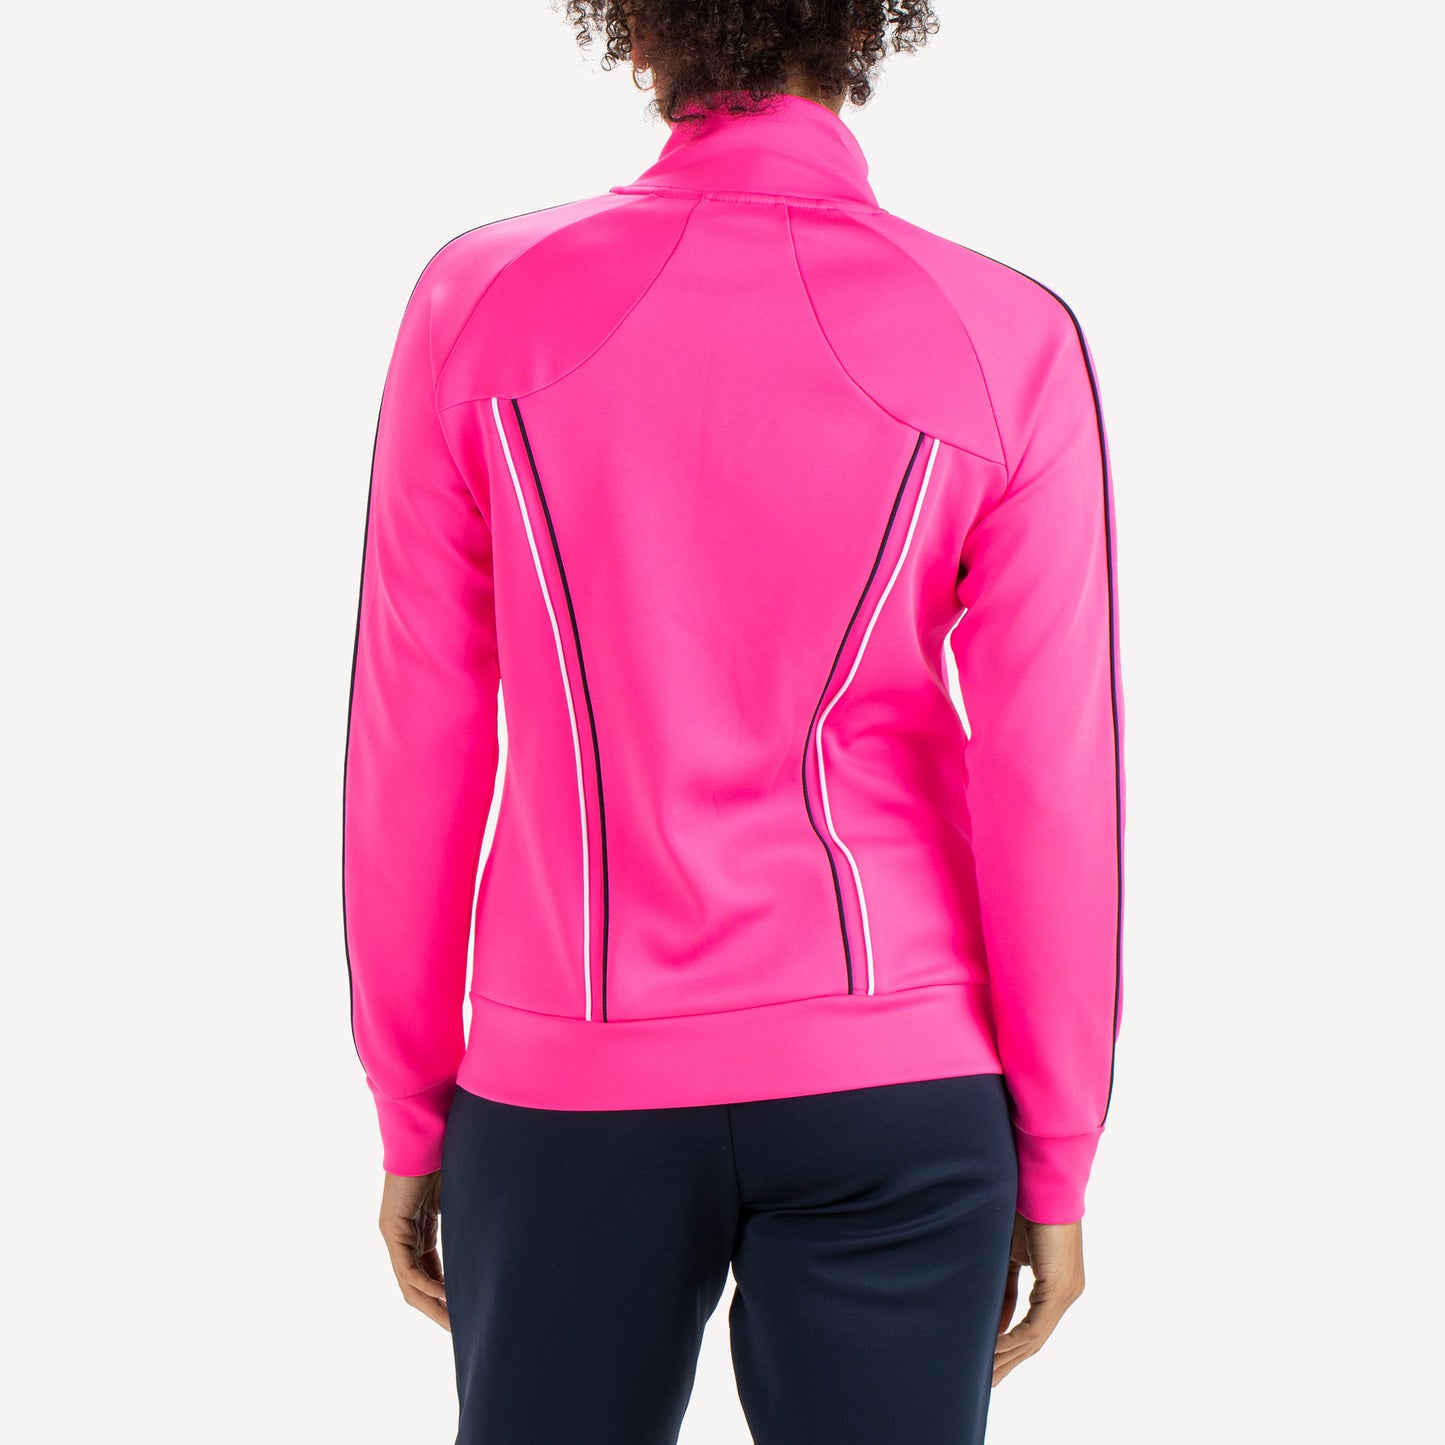 Sjeng Sports Aline Women's Tennis Jacket Pink (2)